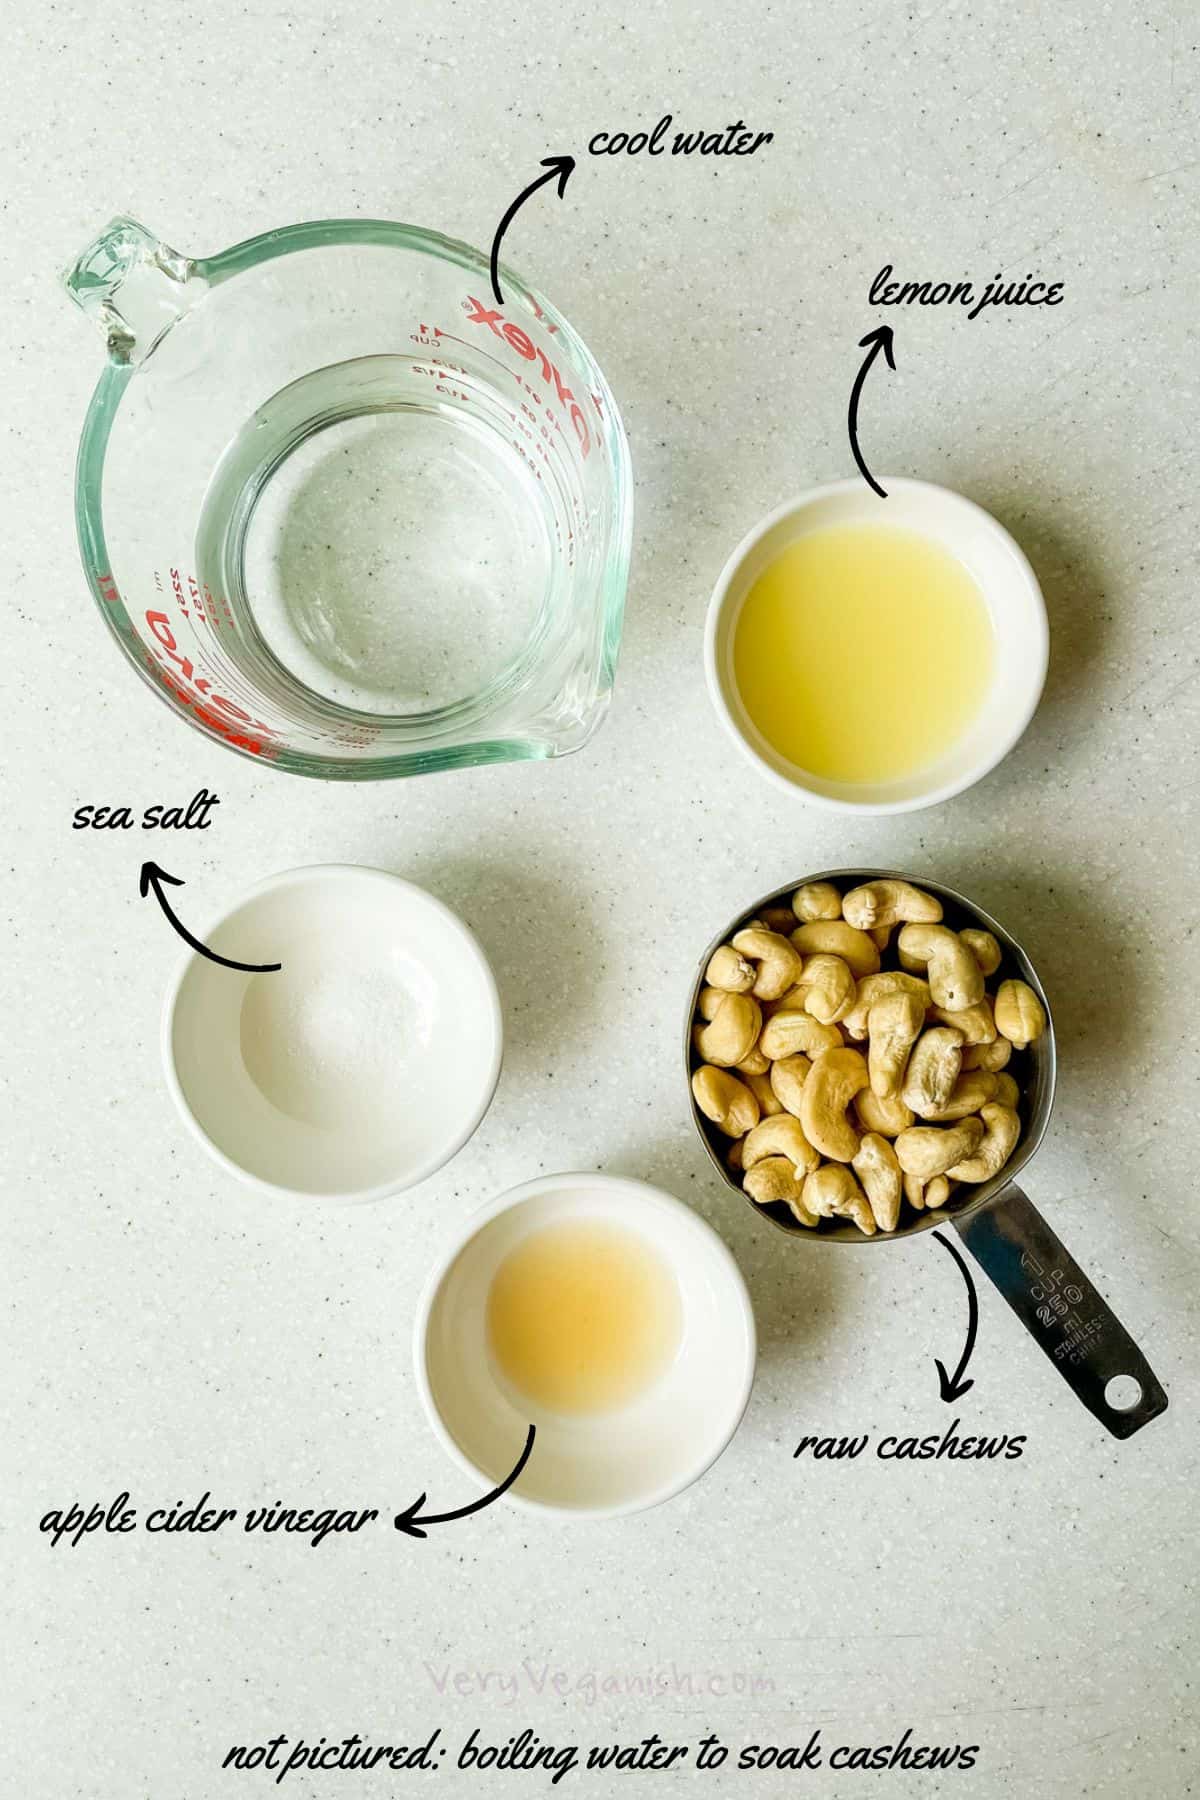 Ingredients for cashew sour cream: cool water, raw cashews, lemon juice, apple cider vinegar, sea salt